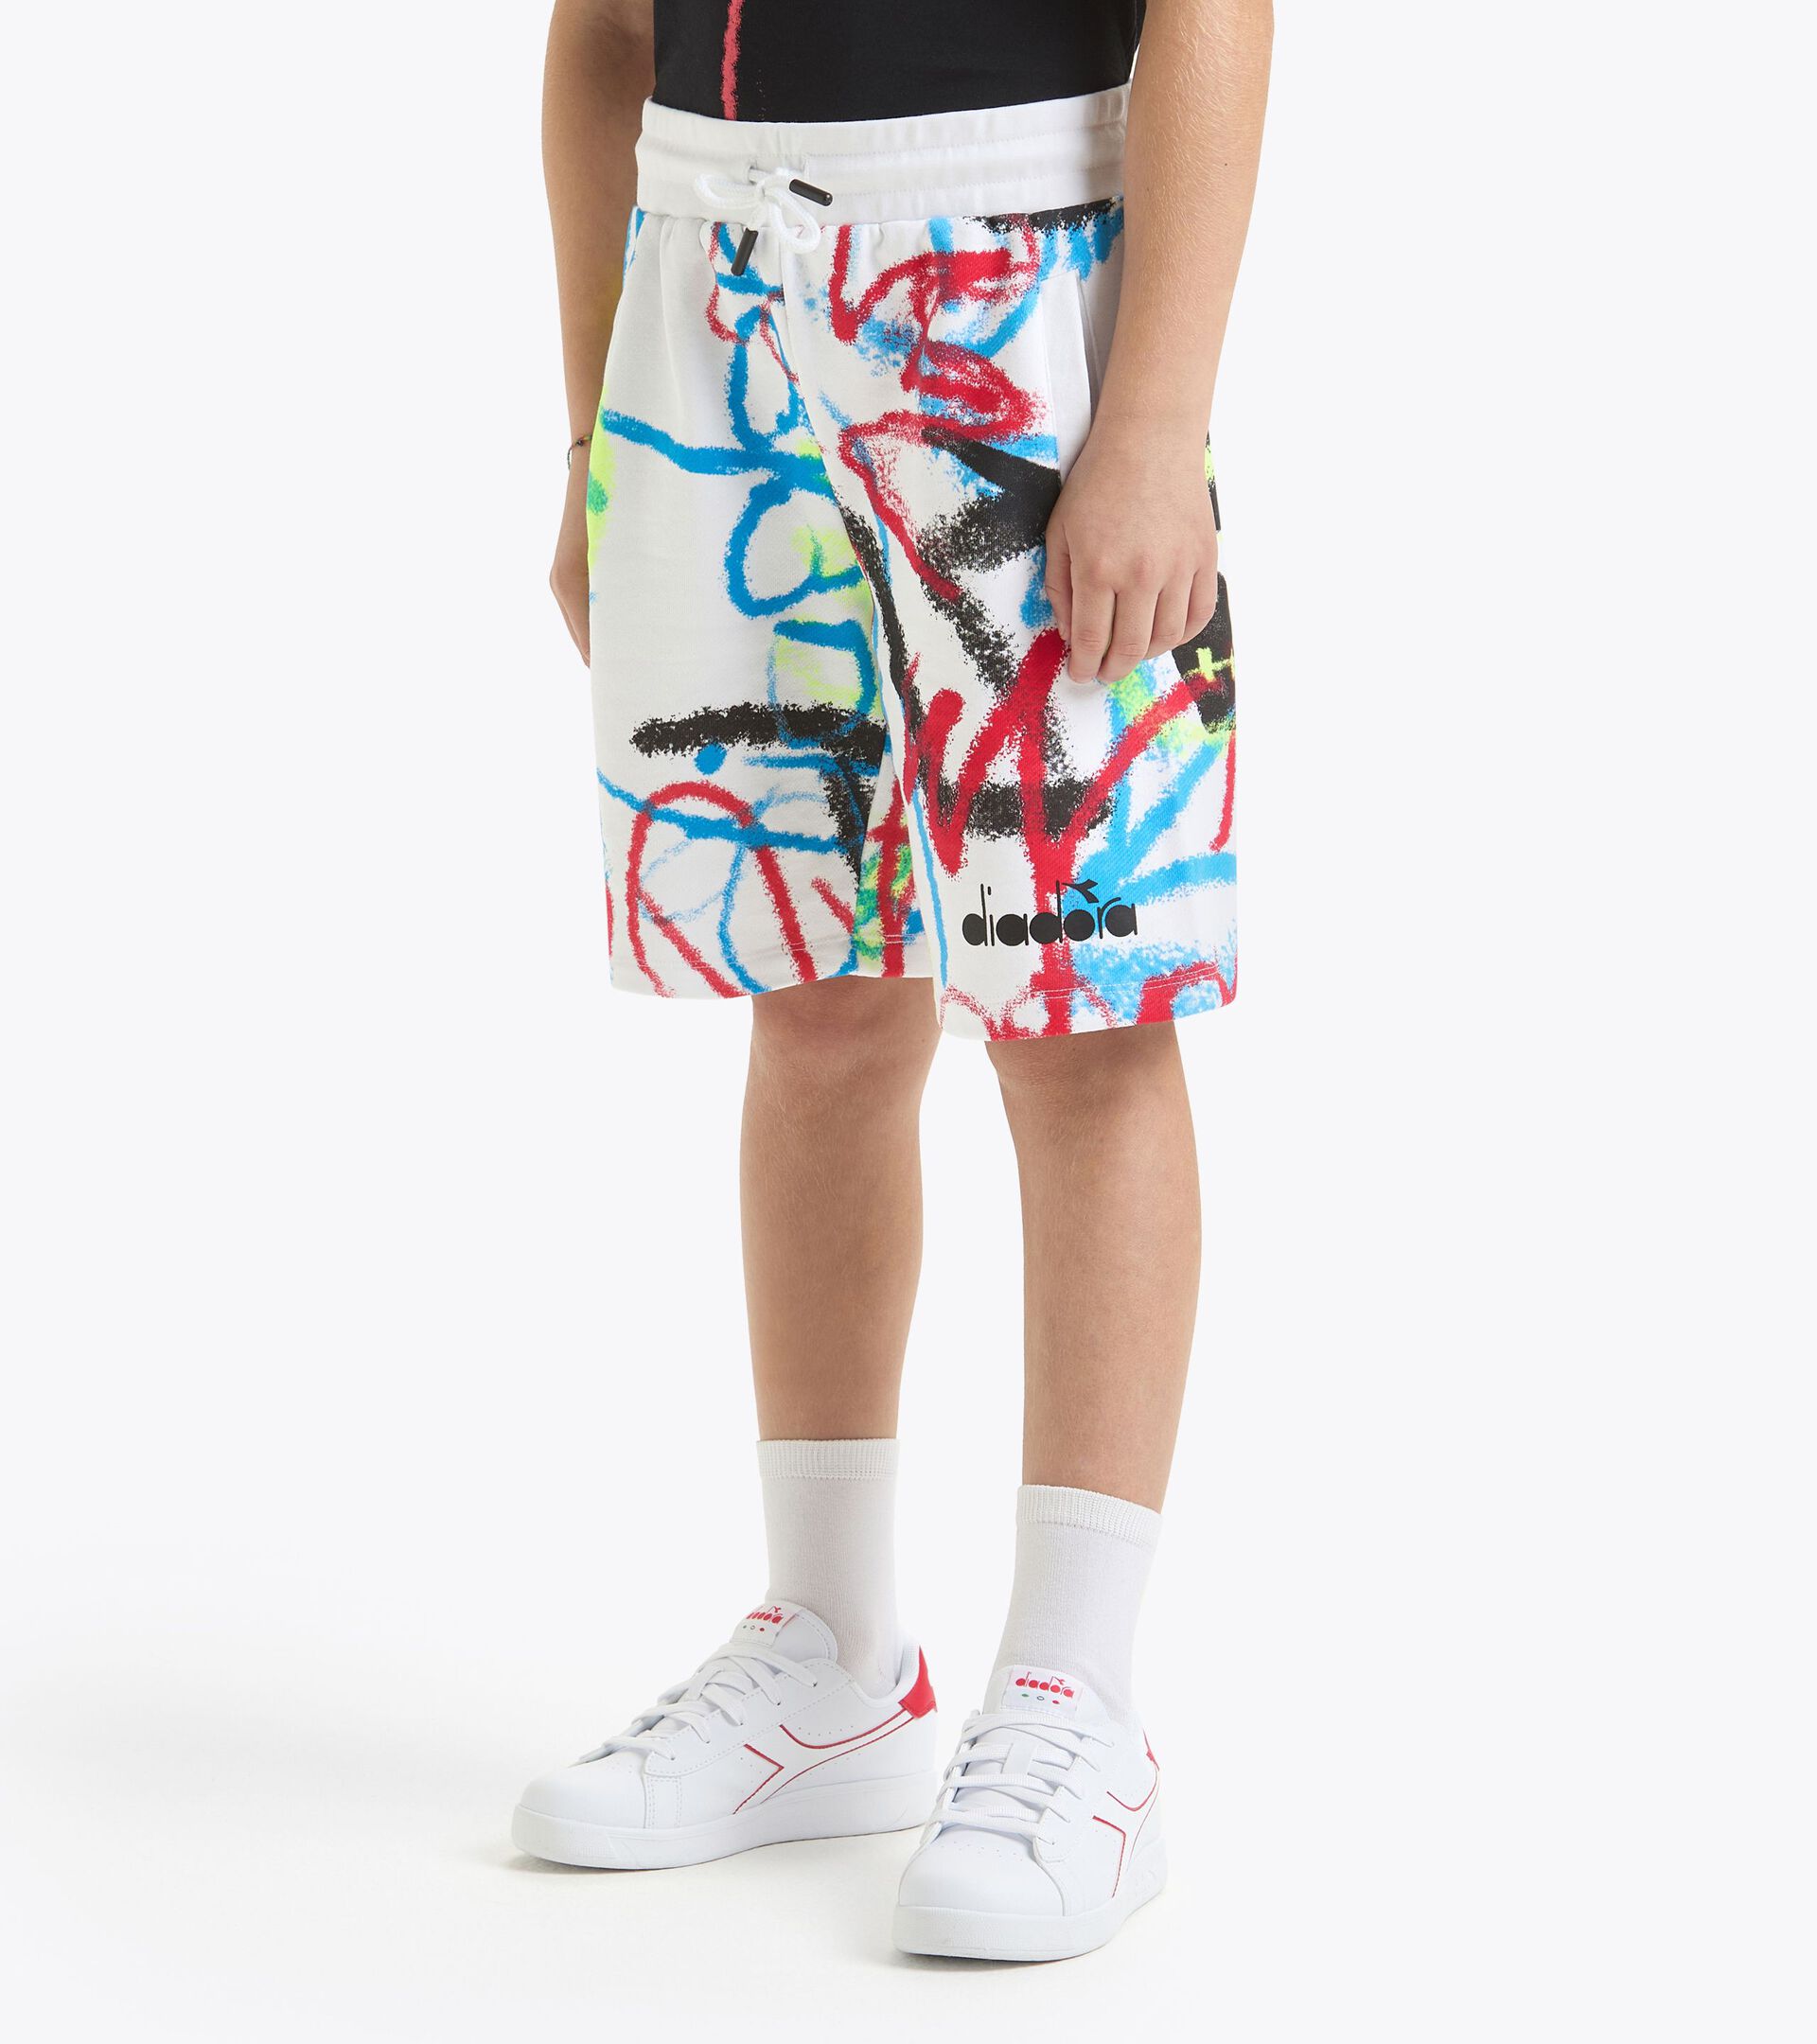 Bermuda shorts - Graffiti-inspired print - Boy
 JB. BERMUDA GRAFFITI ANTIQUE WHITE - Diadora